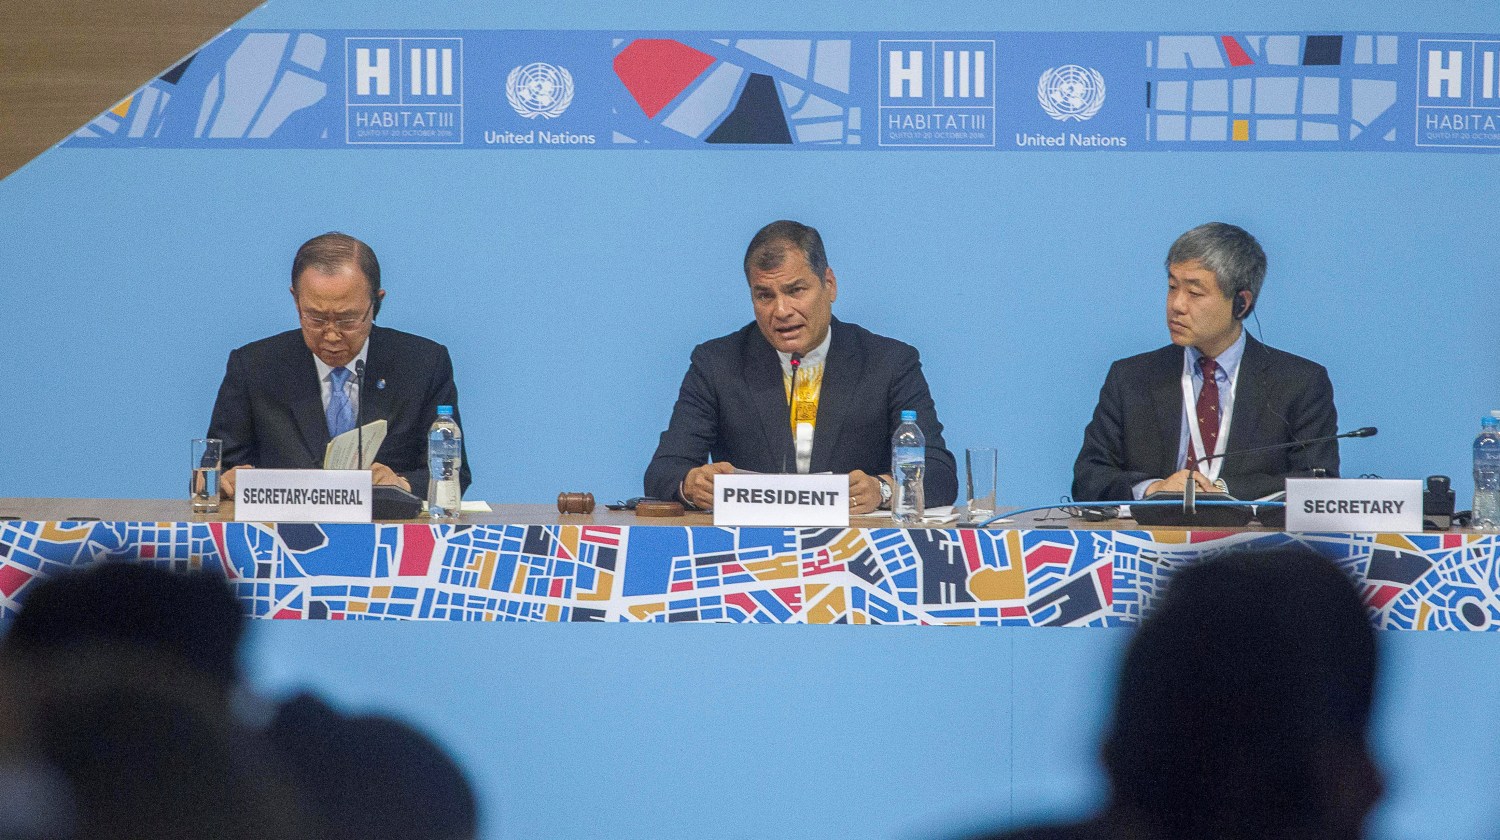 Secretary General of UN Ban Ki-moon, Ecuadorean President Rafael Correa and Secretary General of UN Habitat III conference Joan Clos attend ceremony at the Habitat III headquarters in Quito